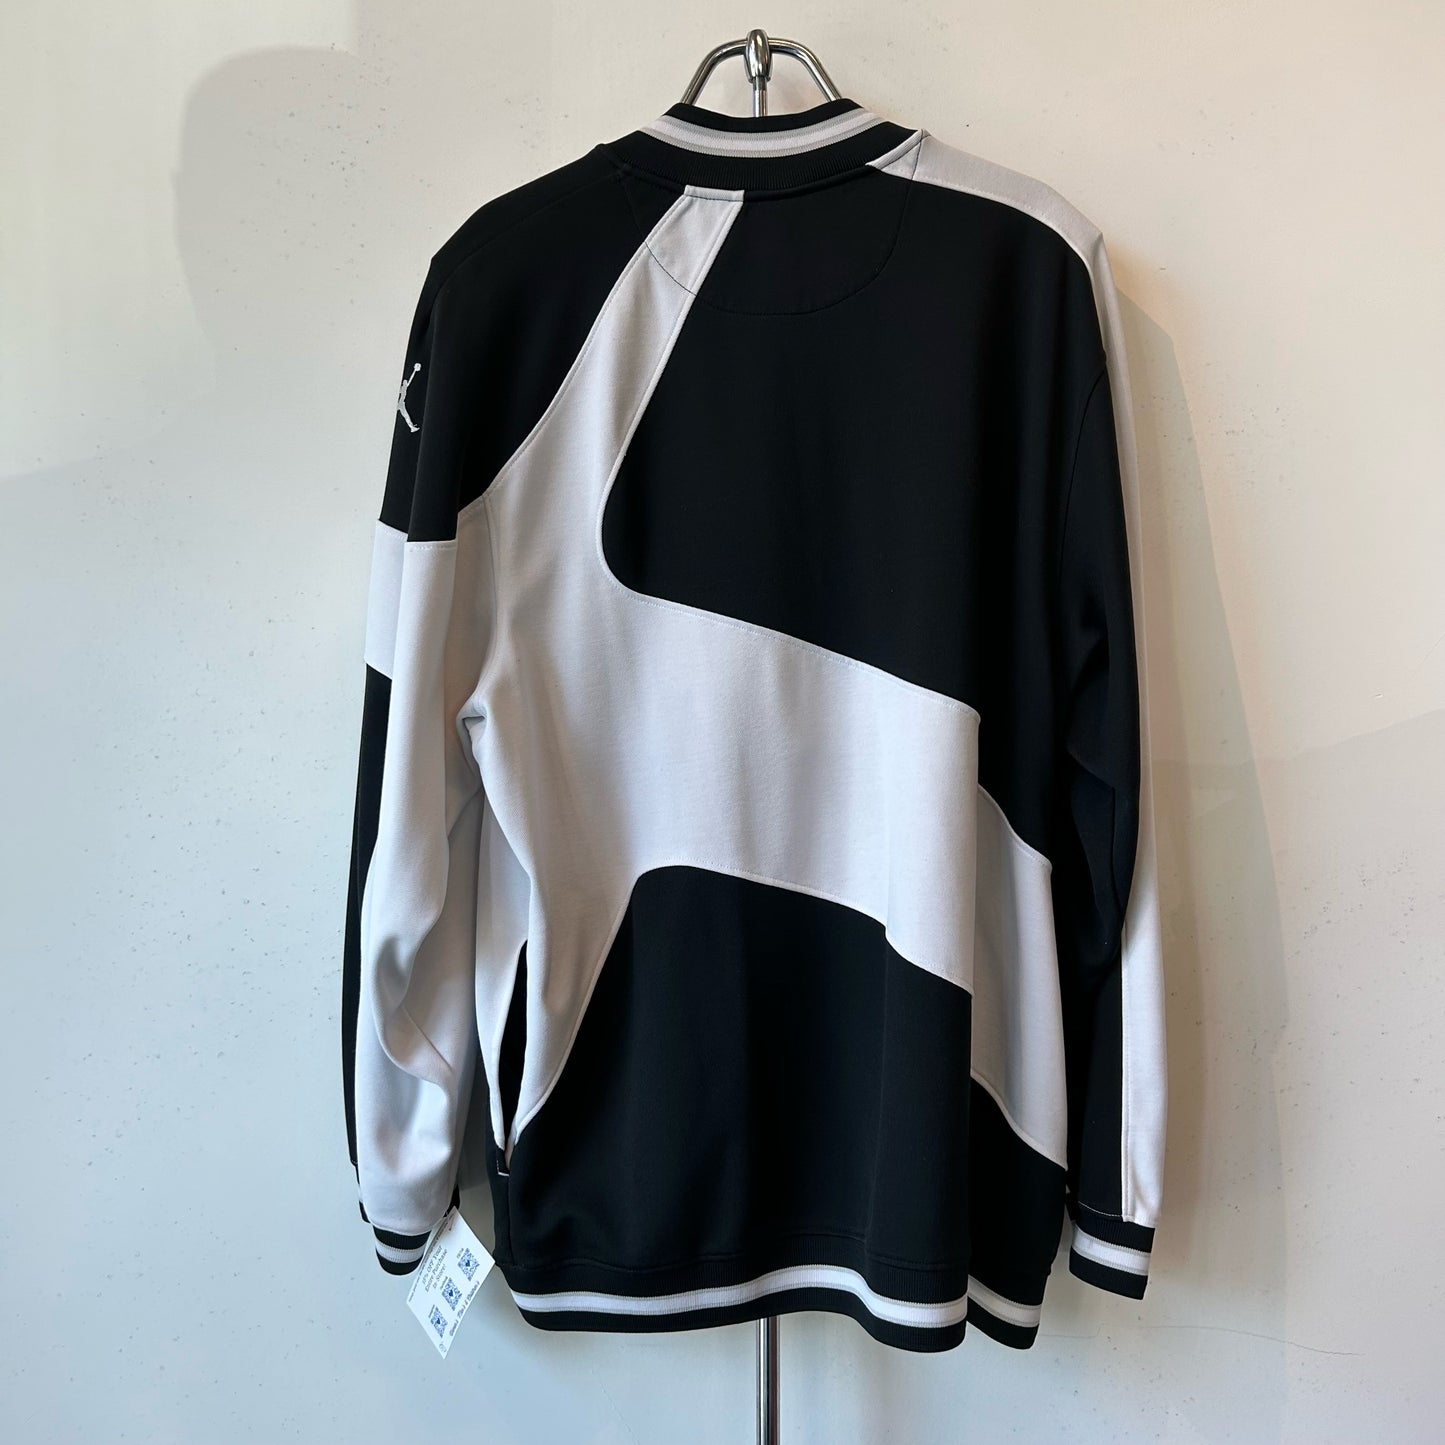 L Air Jordan Black-White Sweater